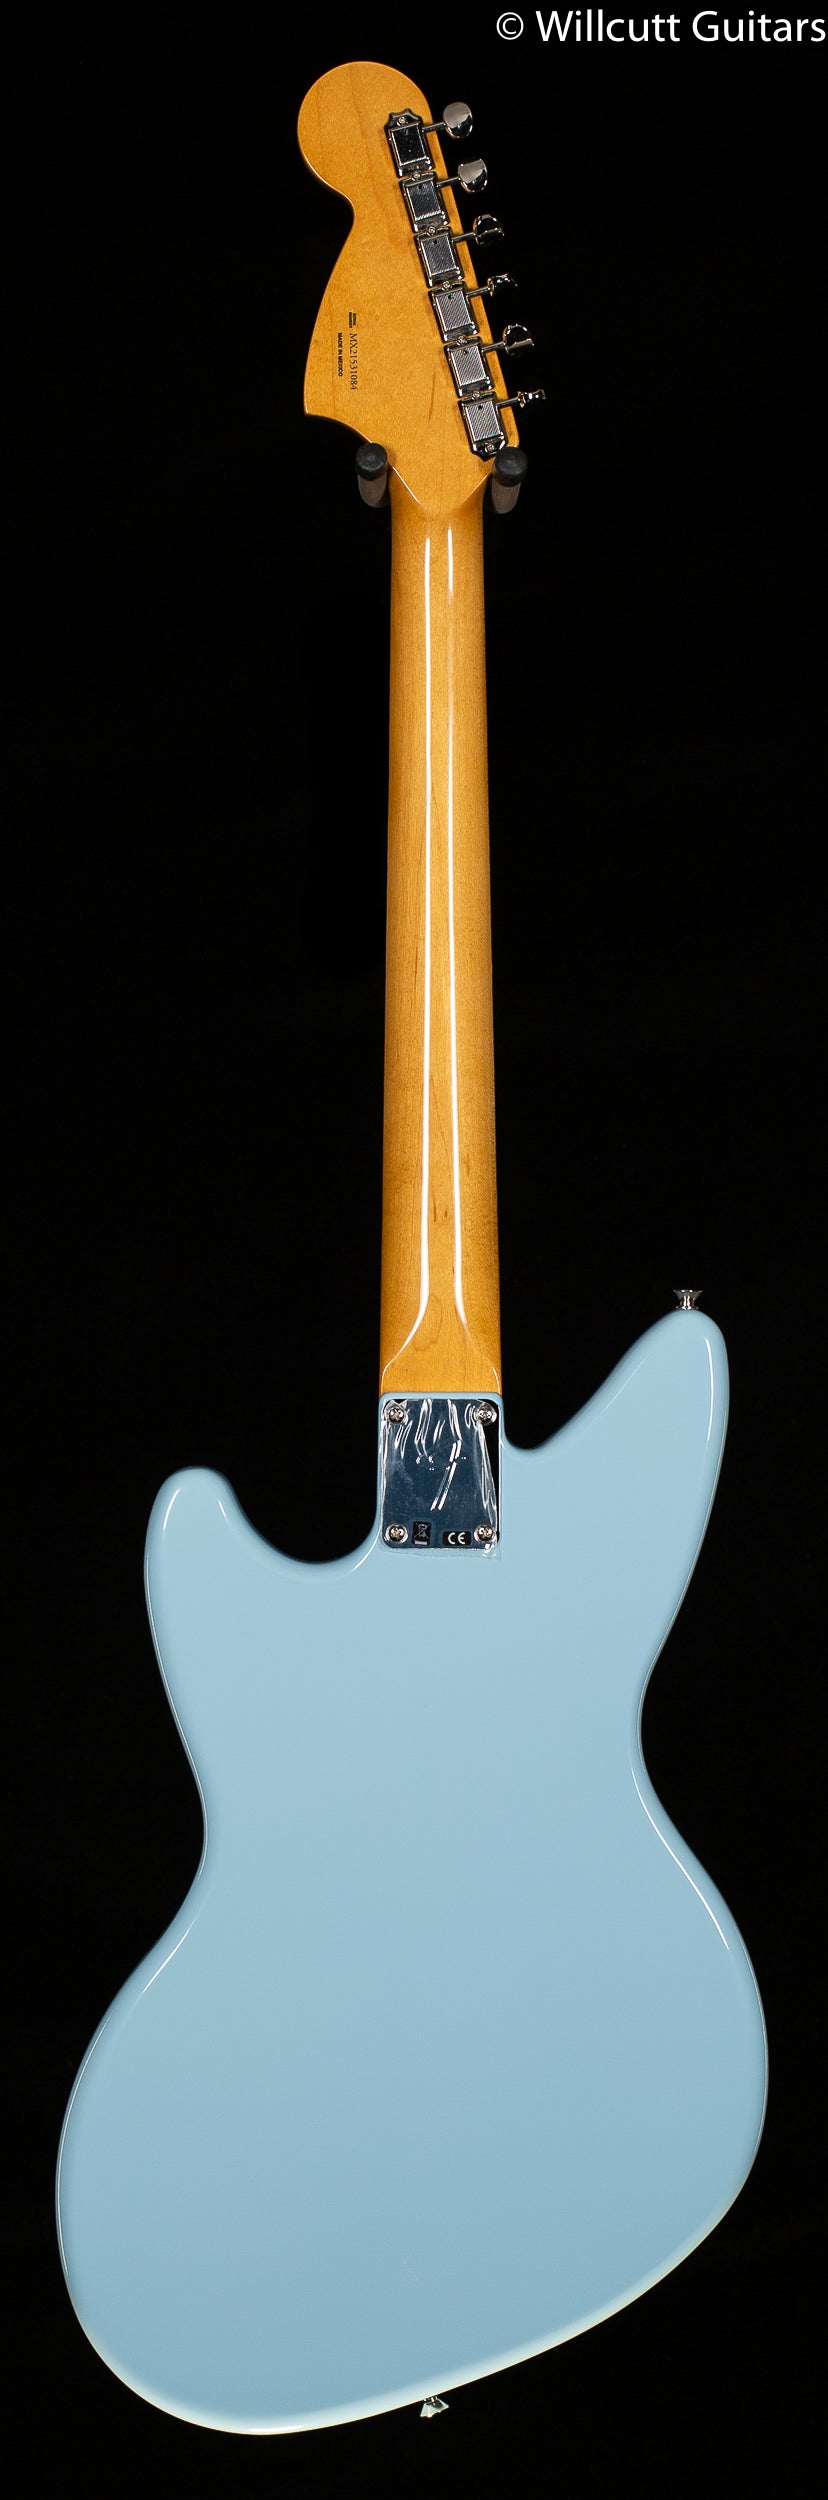 Fender Kurt Cobain Jag-Stang Sonic Blue Rosewood - Willcutt Guitars